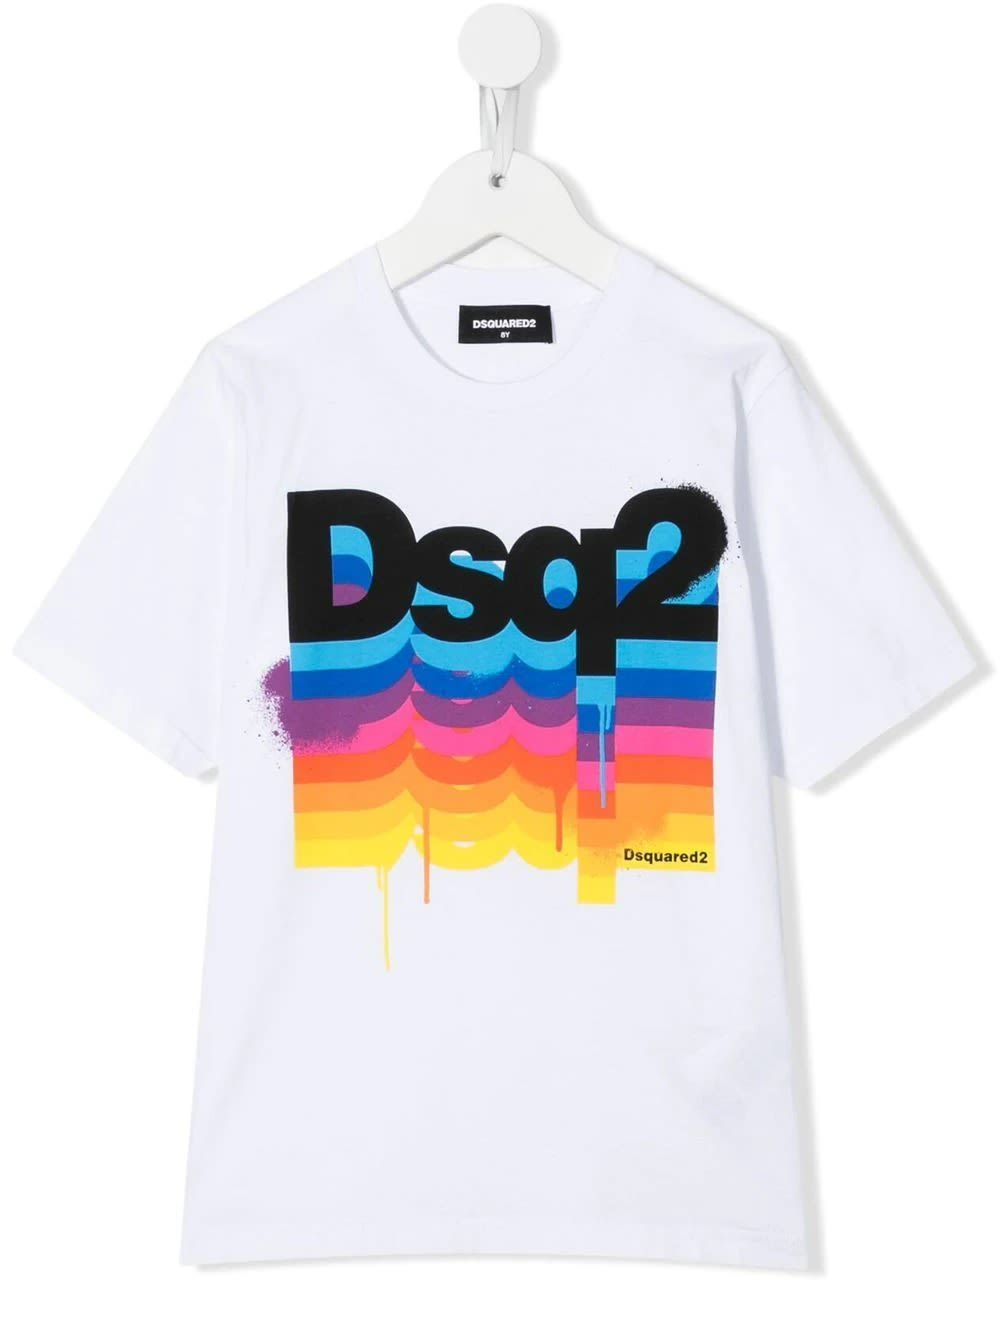 Dsquared2 Kids White T-shirt With Multicoloured dsq2 Print